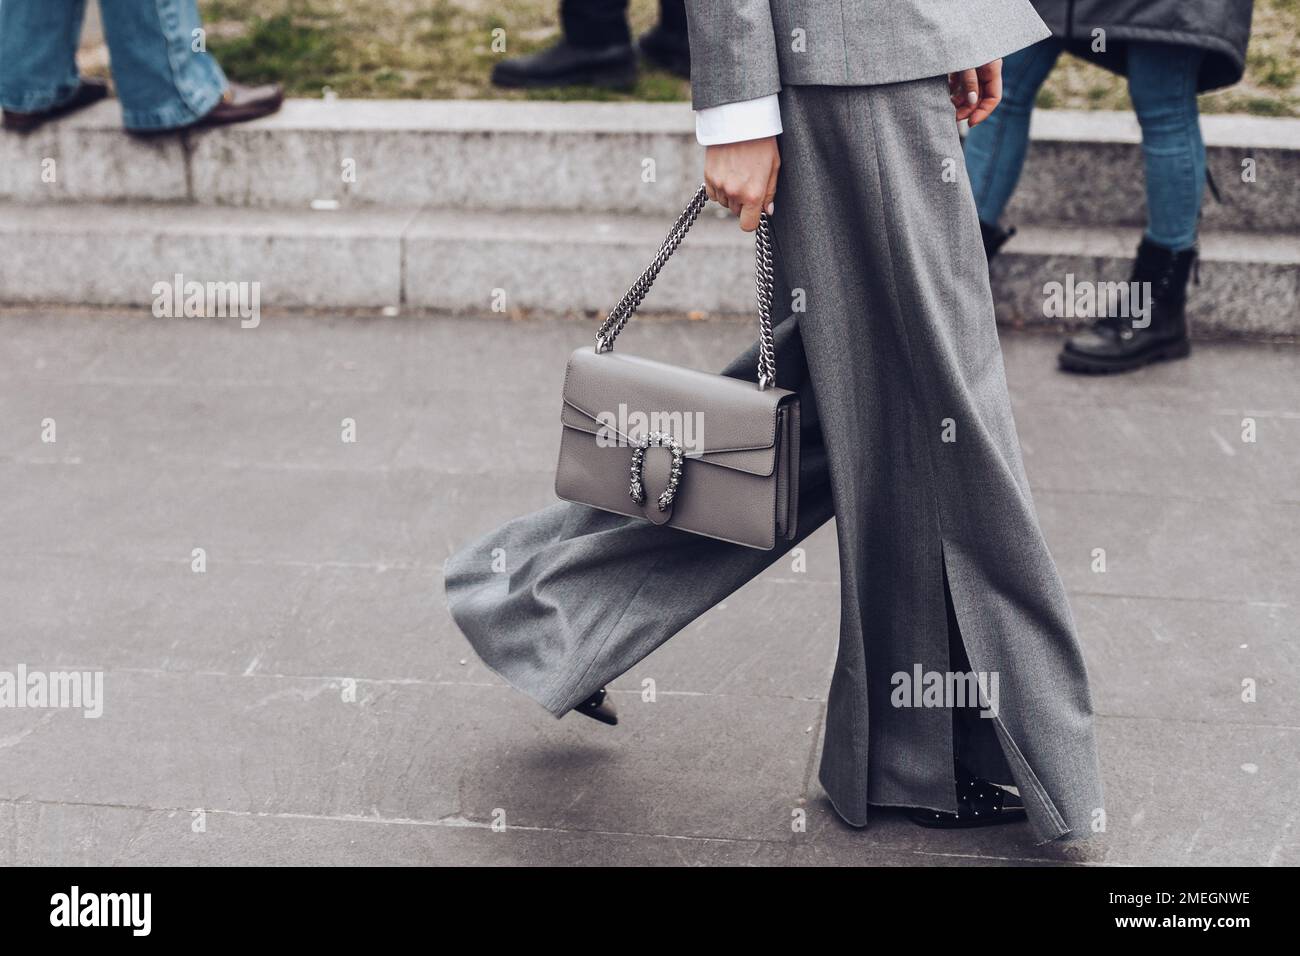 https://c8.alamy.com/compes/2megnwe/milan-italia-24-de-febrero-de-2022-mujer-en-chaqueta-gris-y-pantalones-de-pierna-ancha-con-monedero-de-cadena-2megnwe.jpg